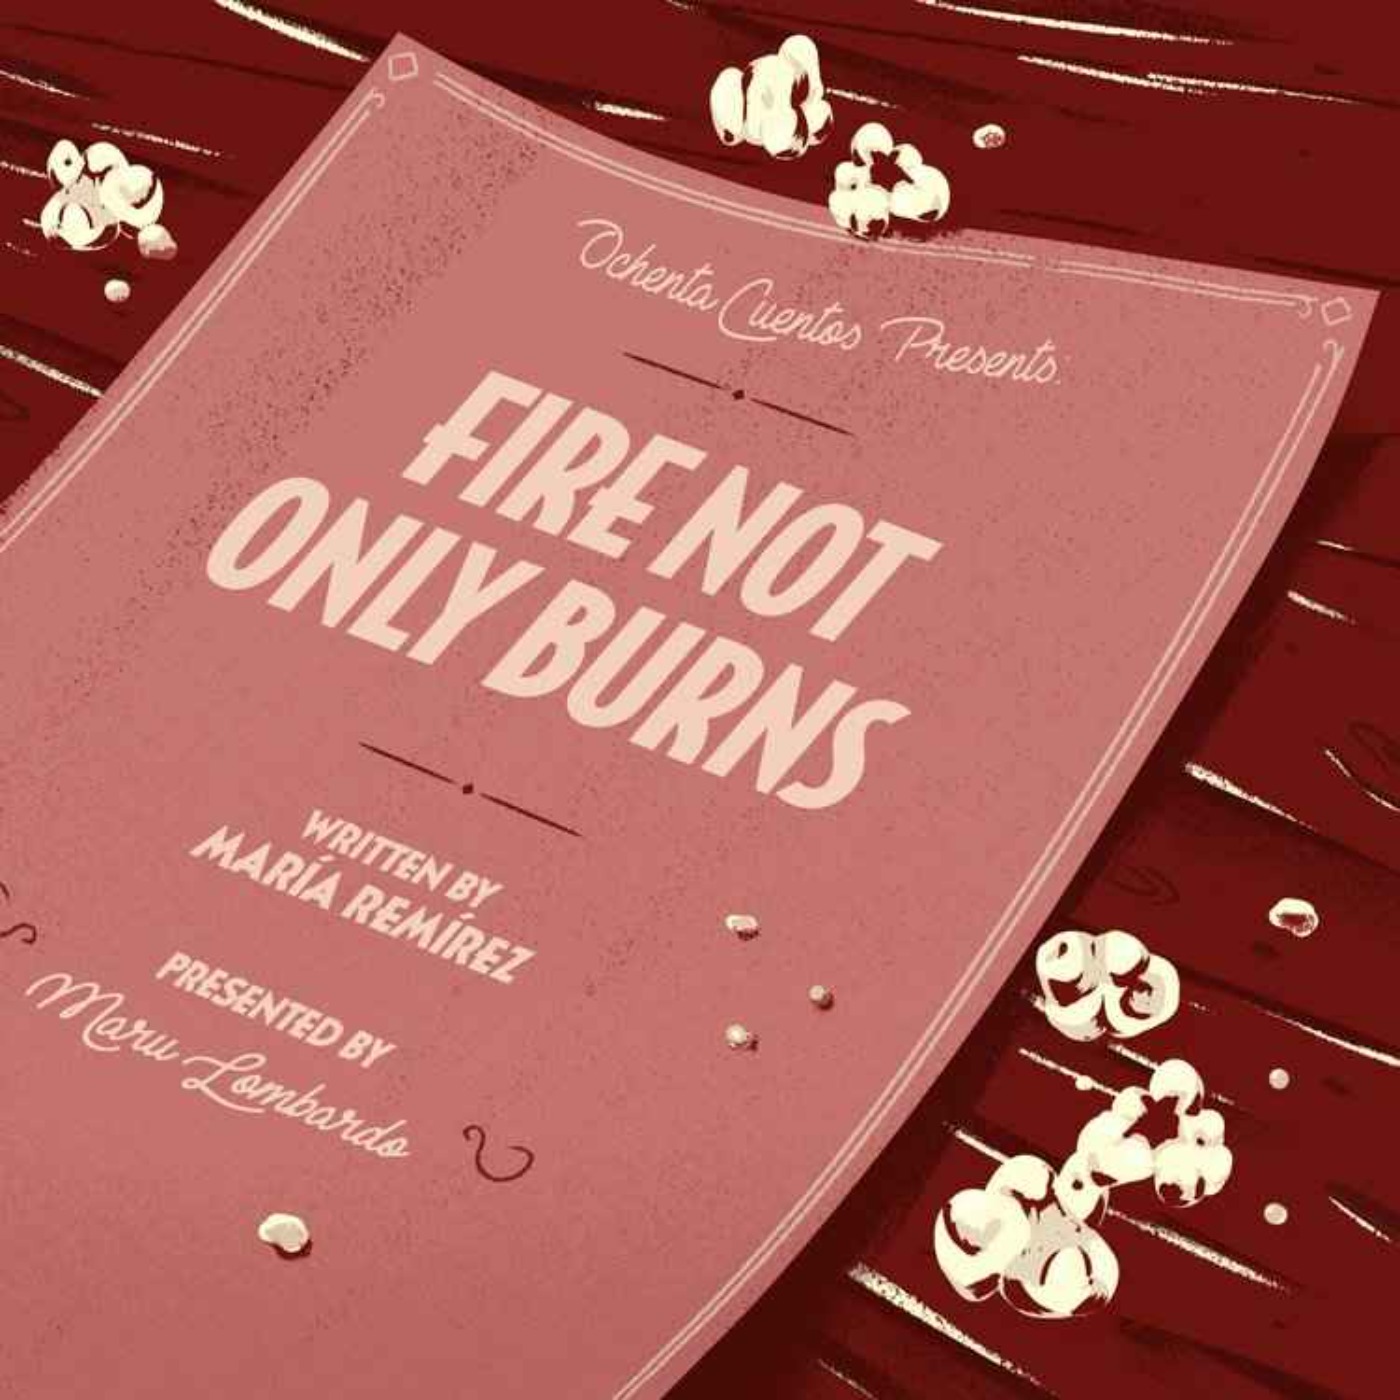 Fire Not Only Burns [Repeat - International Women's Month]